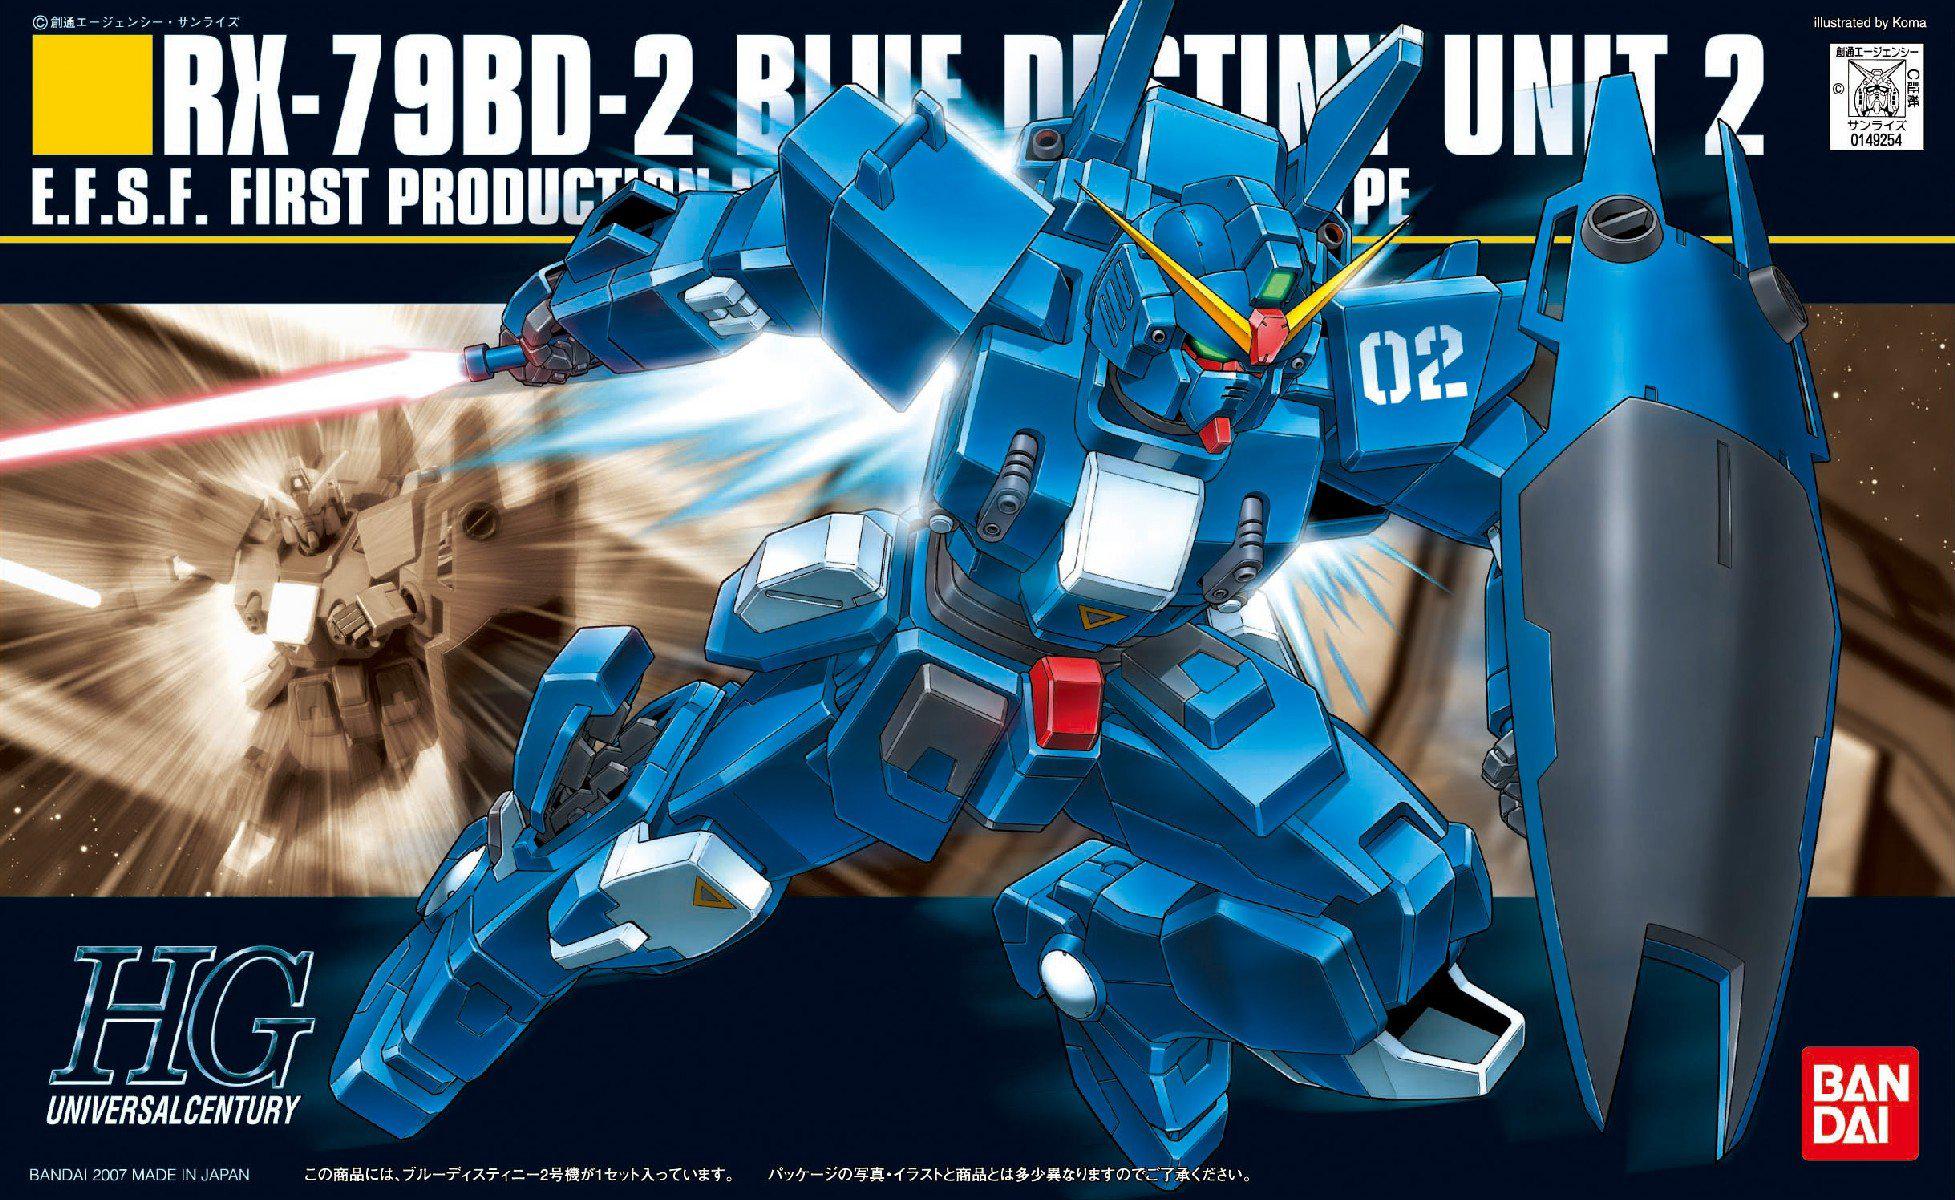 Bandai Toys bandai hobby #77 rx-78bd-2 blue destiny unit 2 bandai hguc action figure